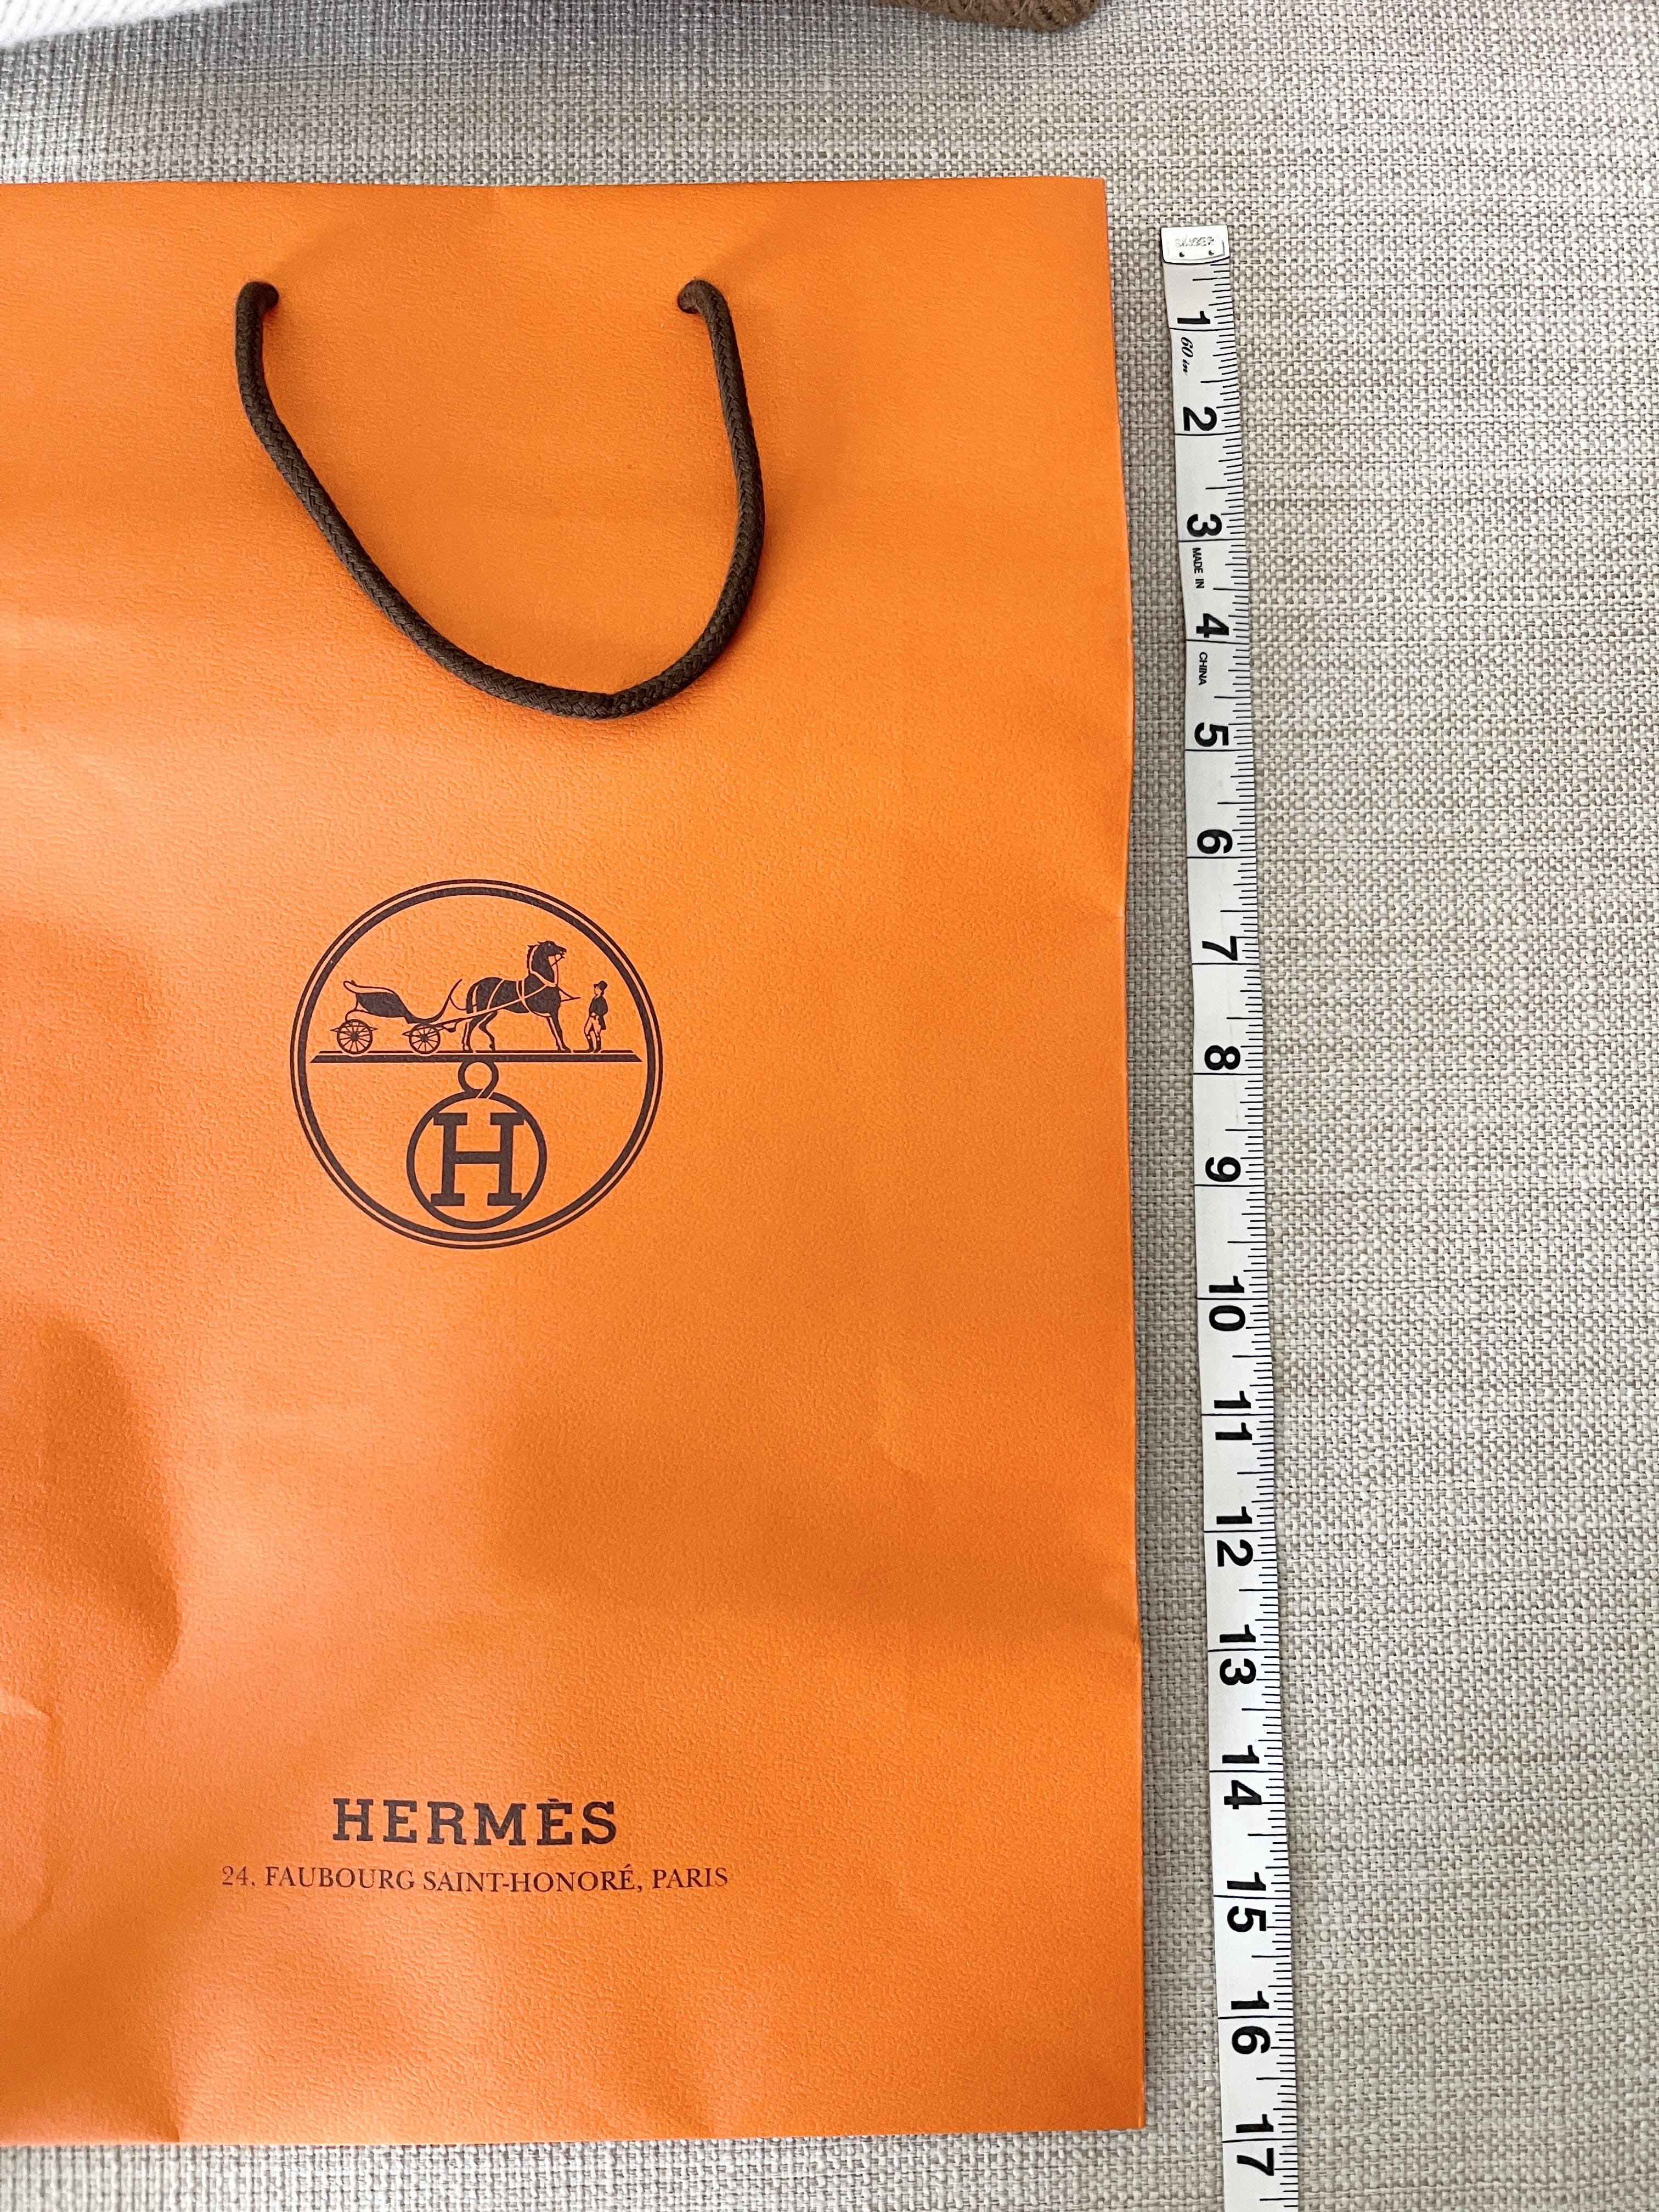 *FINAL* Hermes Hermès Medium Shopping Gift Paper Bag - 5